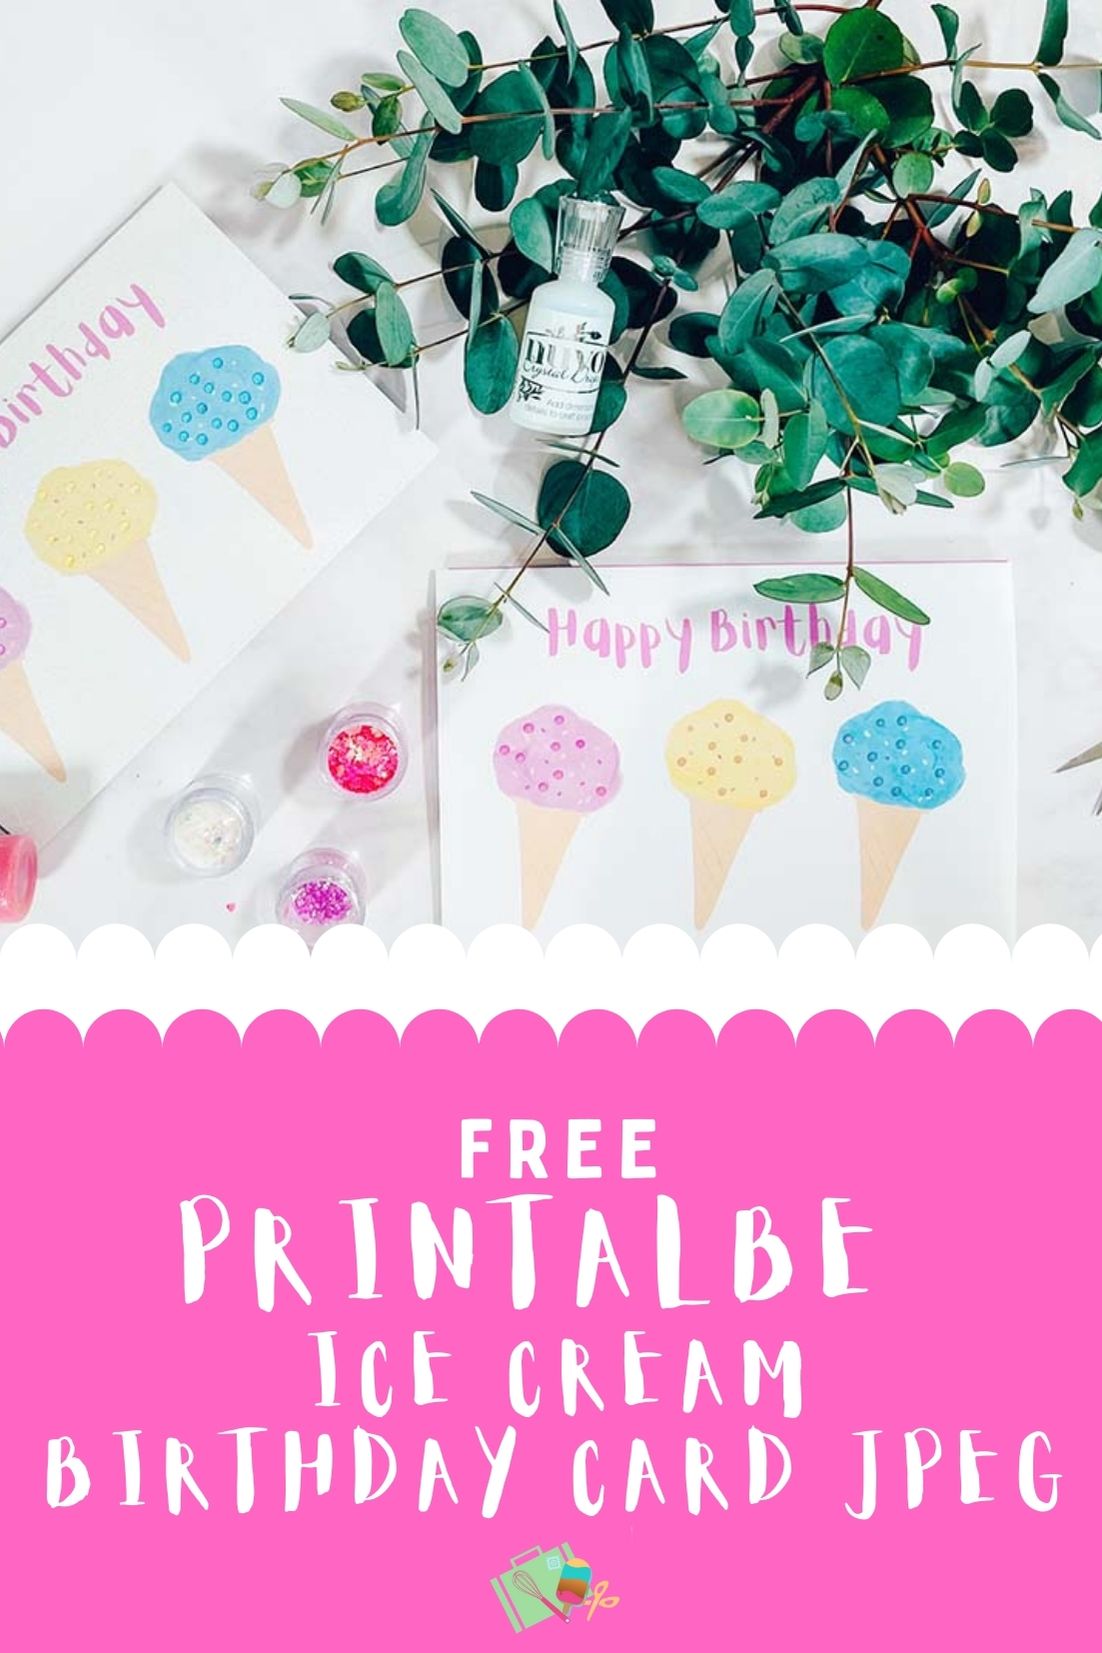 Free printable ice cream birthday card jpeg